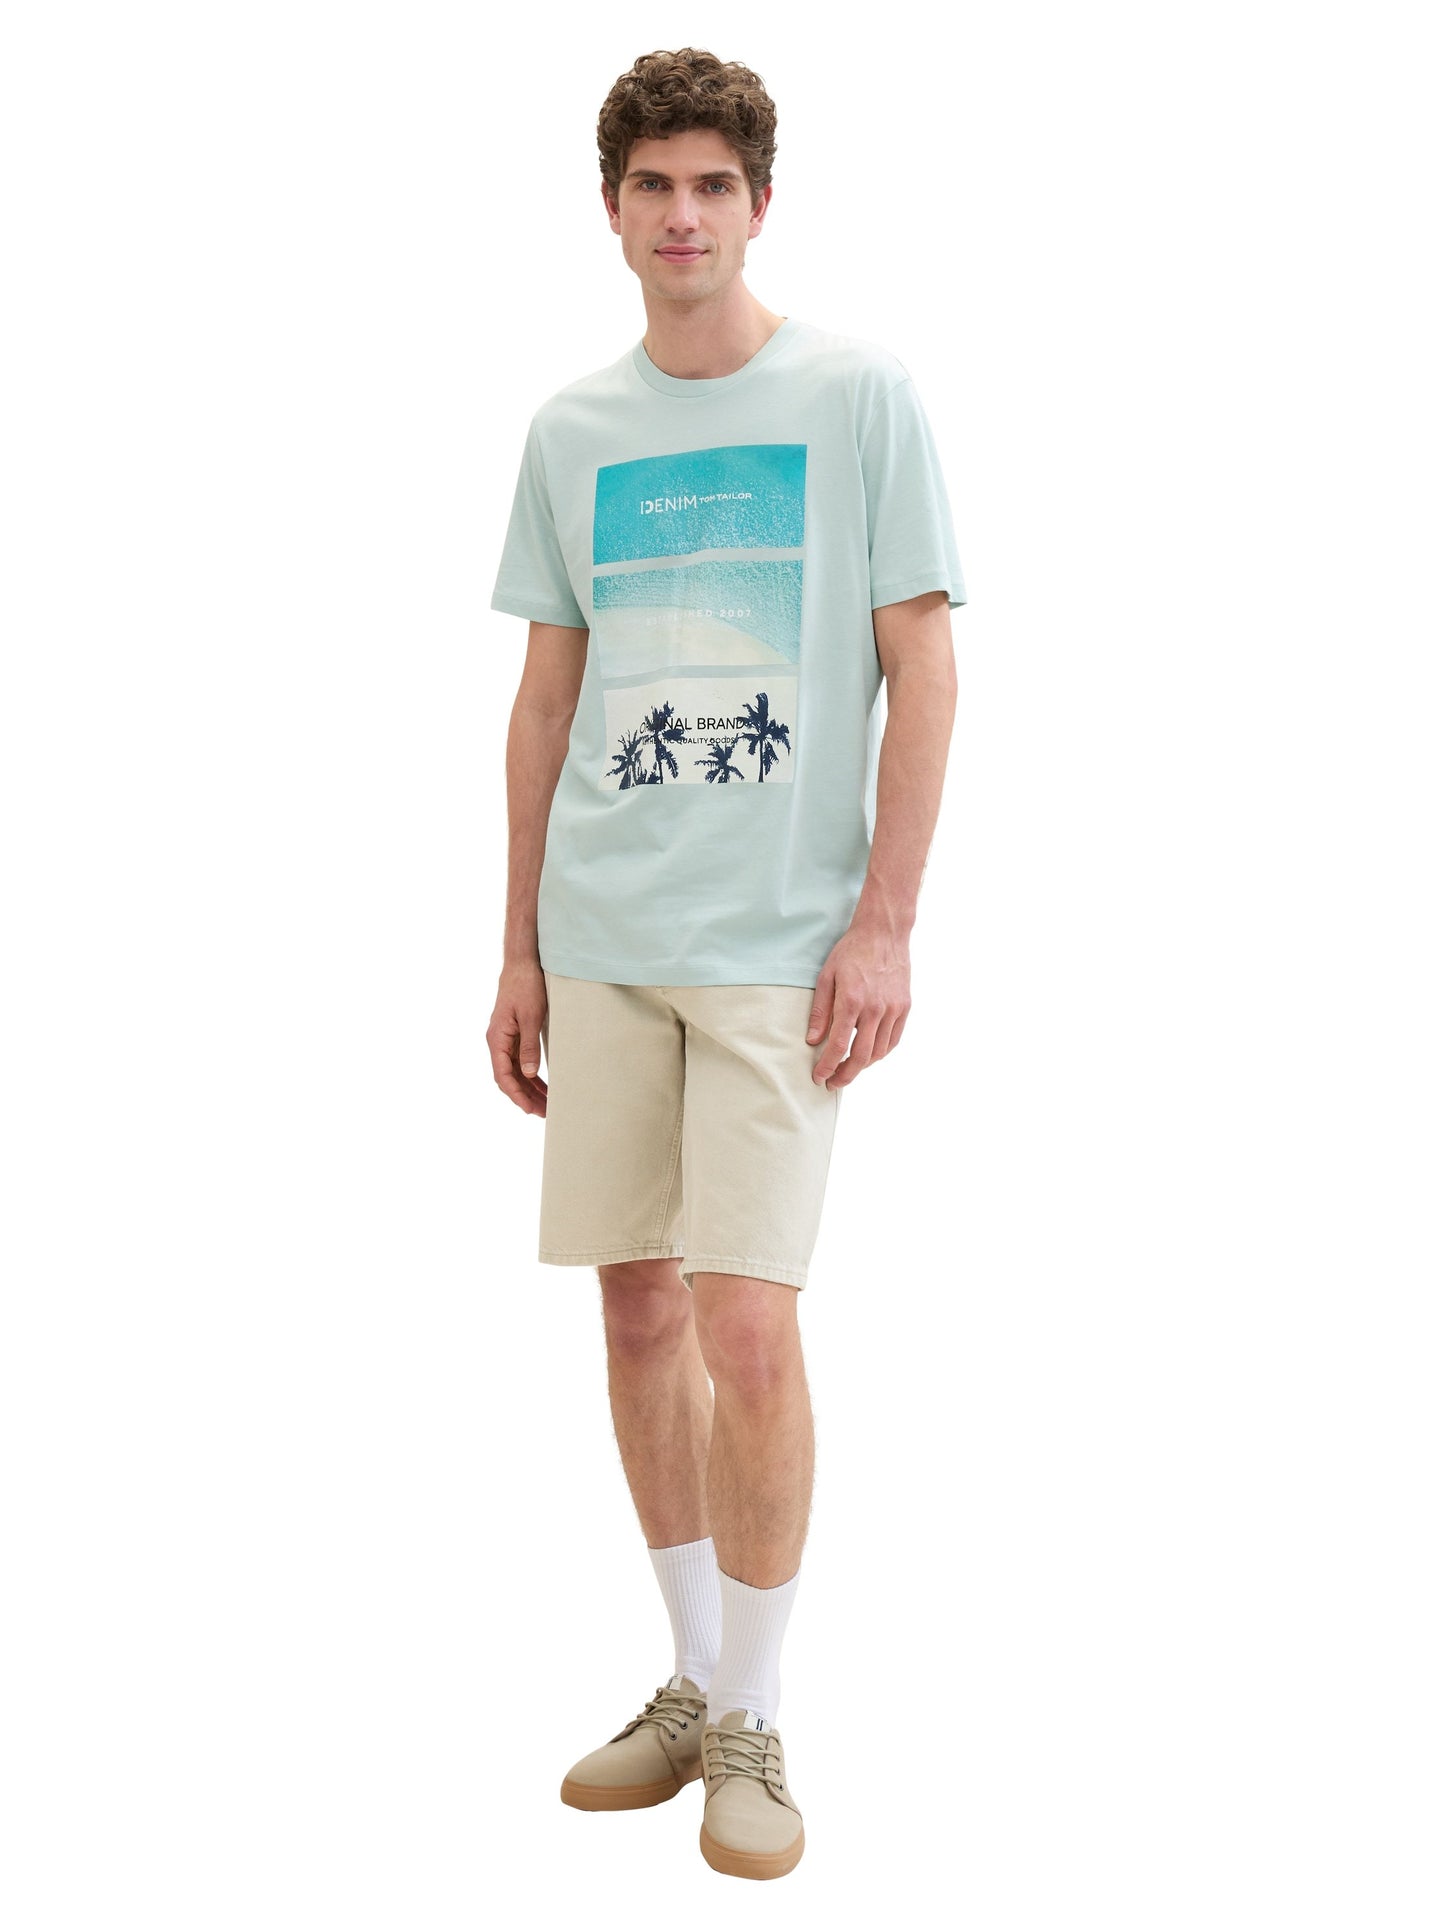 T-Shirt mit Motivprint (Sea Foam)